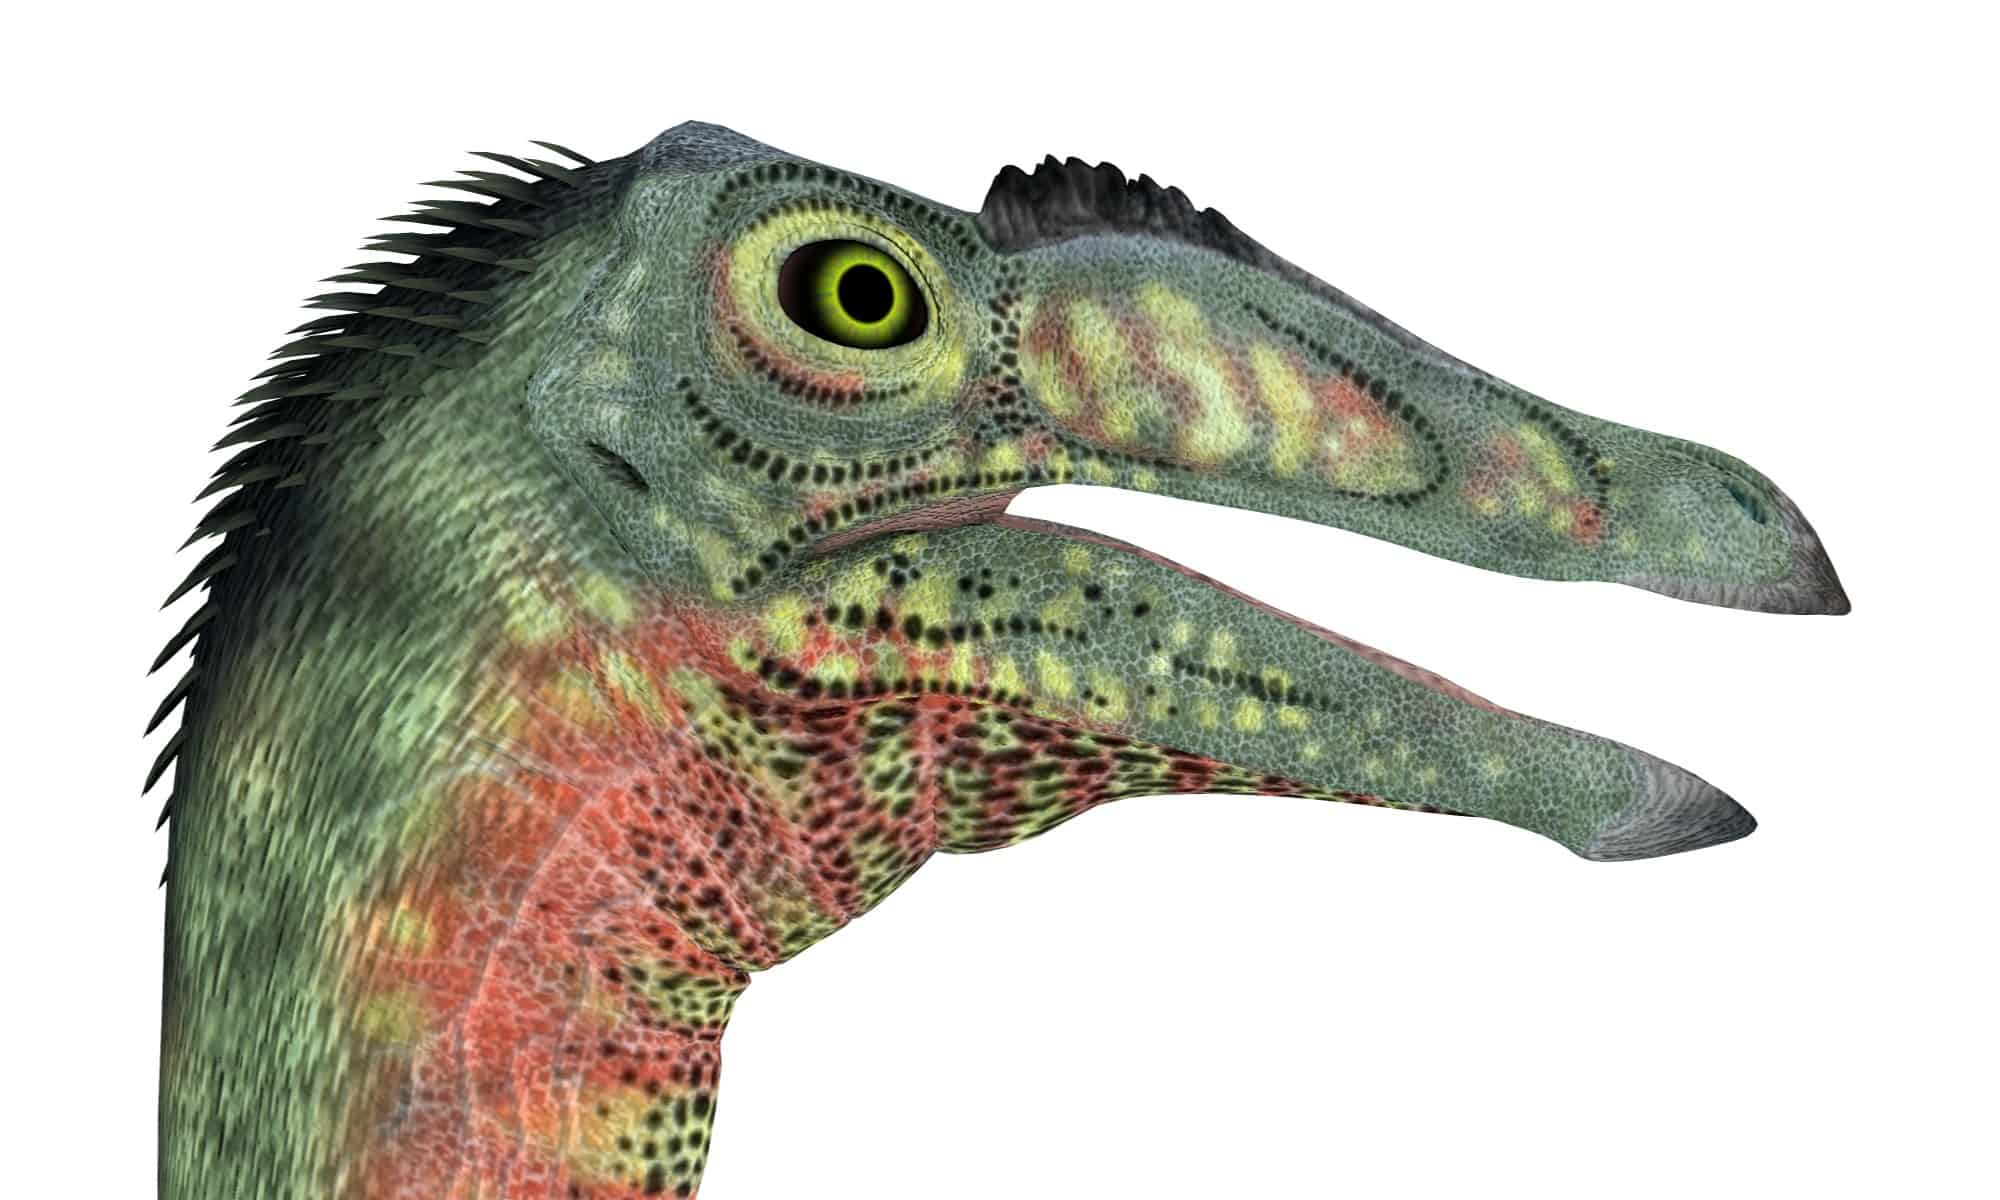 Deinocheirus, the giant hunchbacked dinosaur with